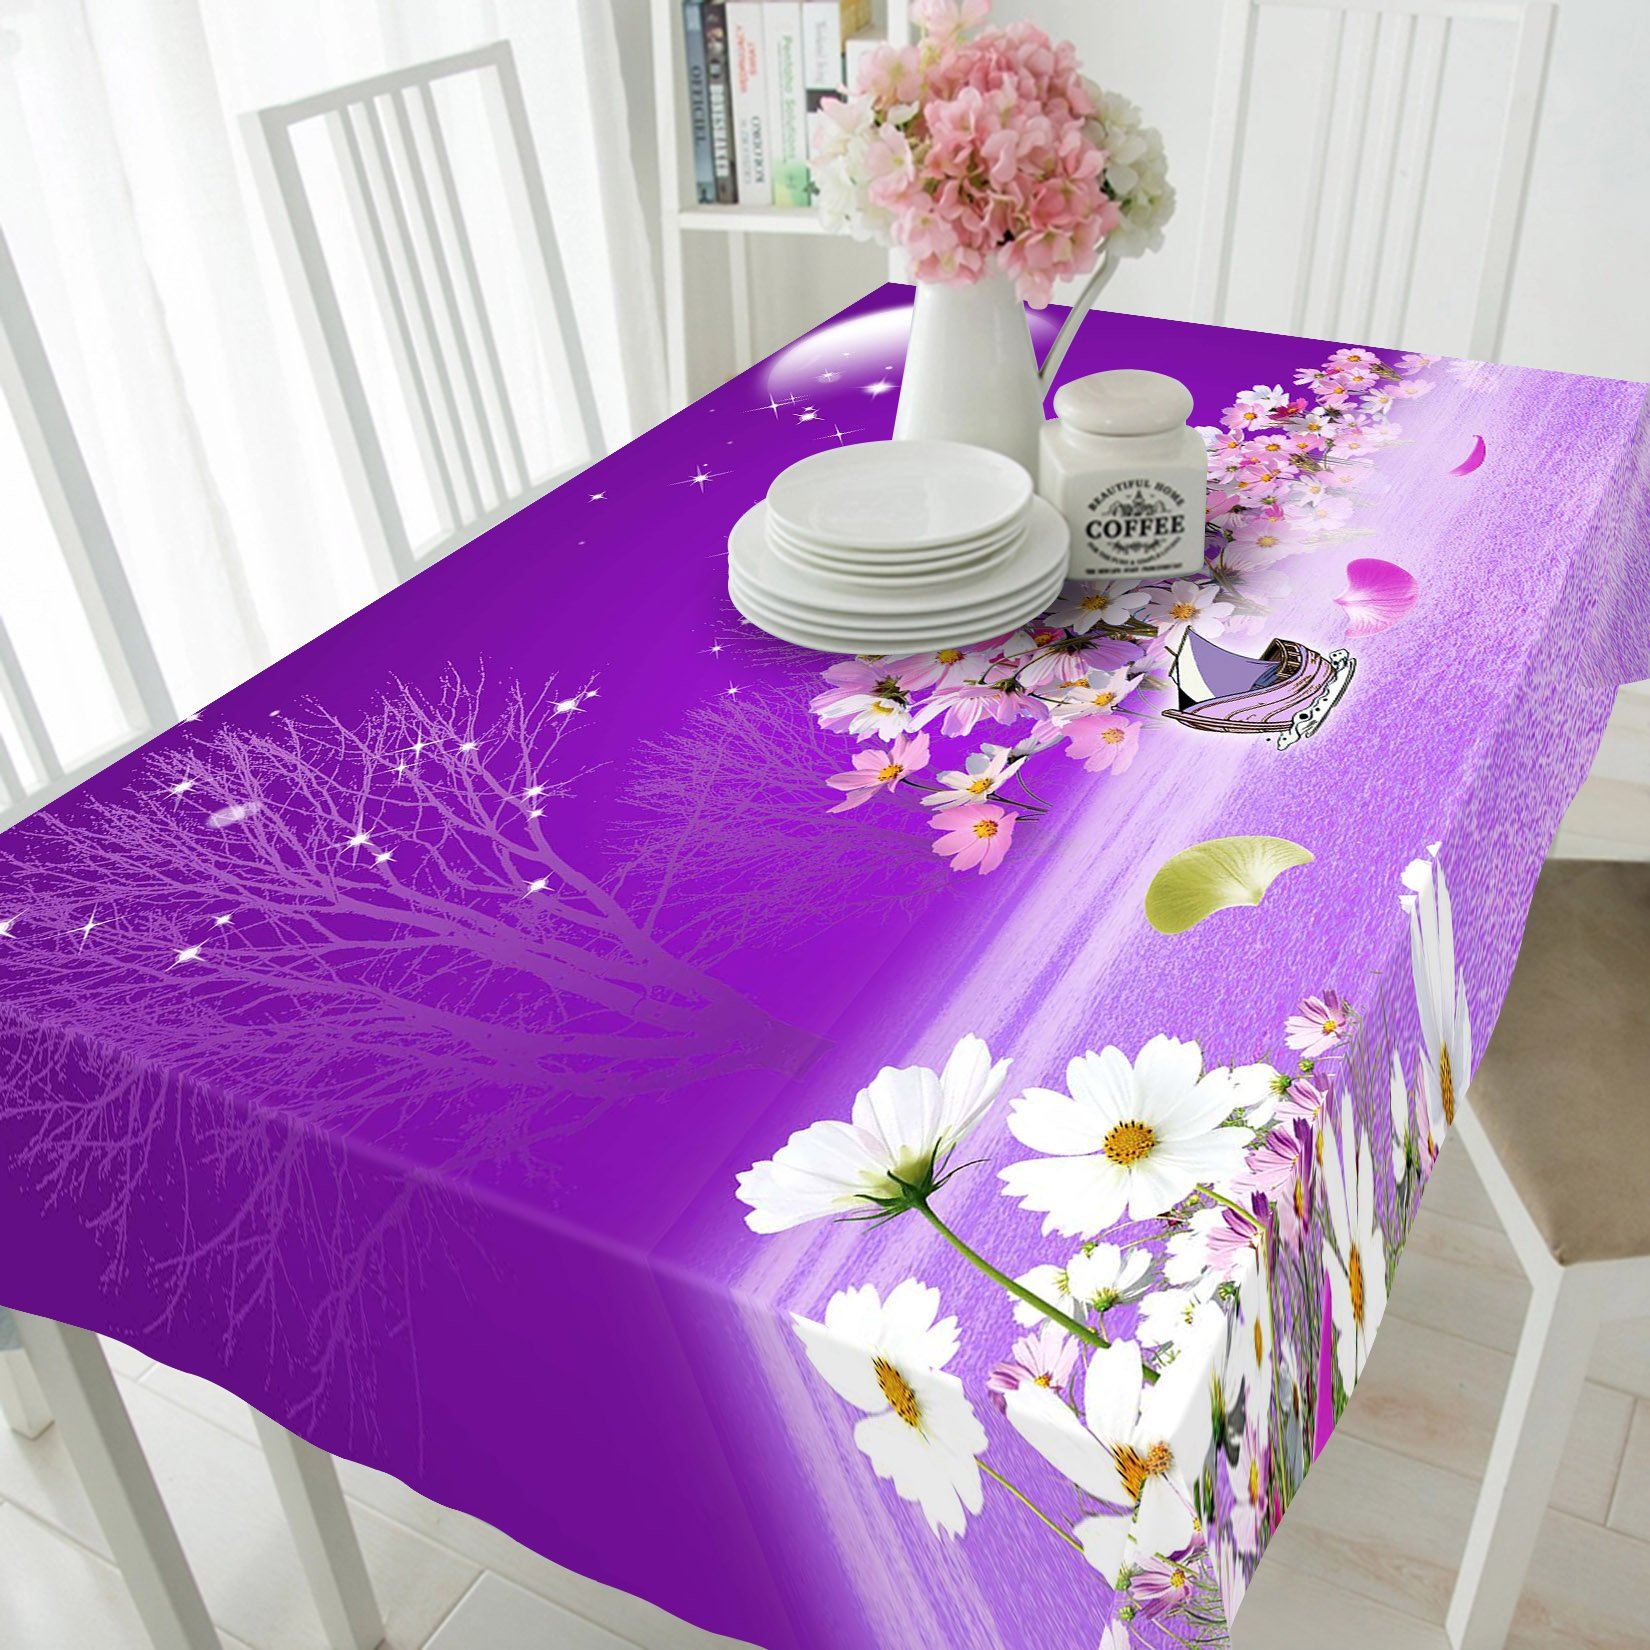 3D Flying Flowers 229 Tablecloths Wallpaper AJ Wallpaper 